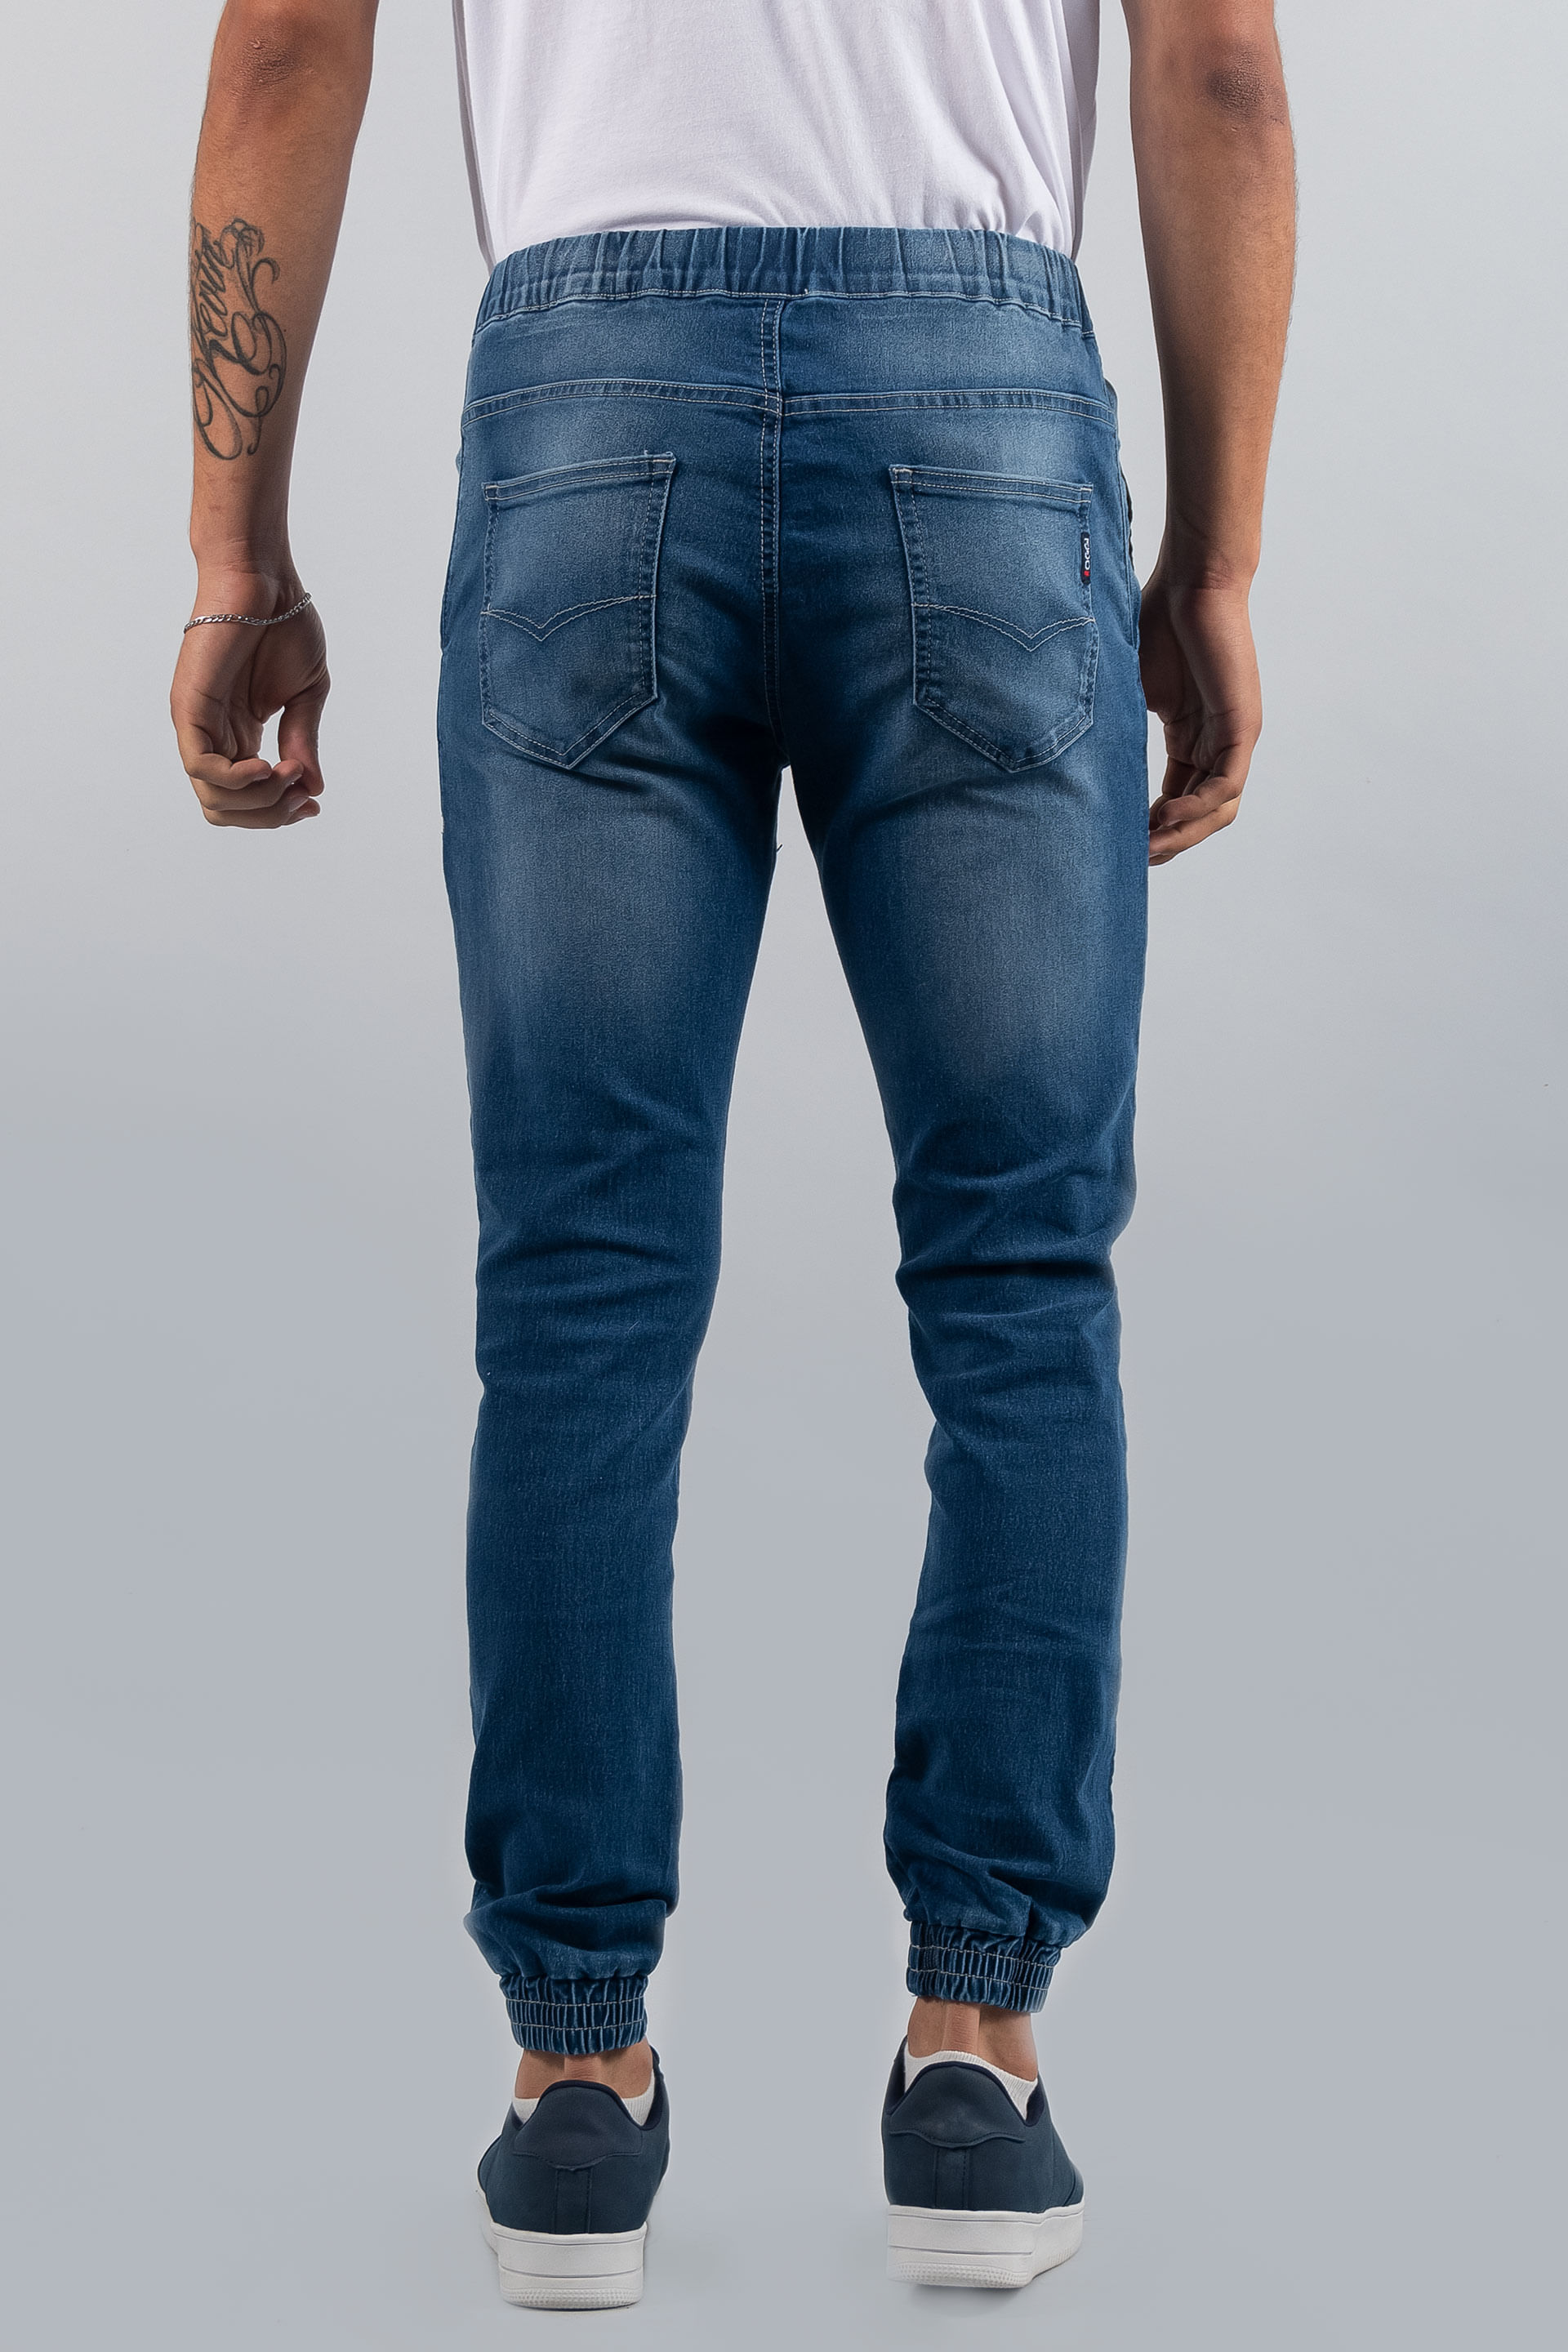 Joggers Skinny Oggi - Moda para Hombre Mezclilla Azul Oscuro 85565